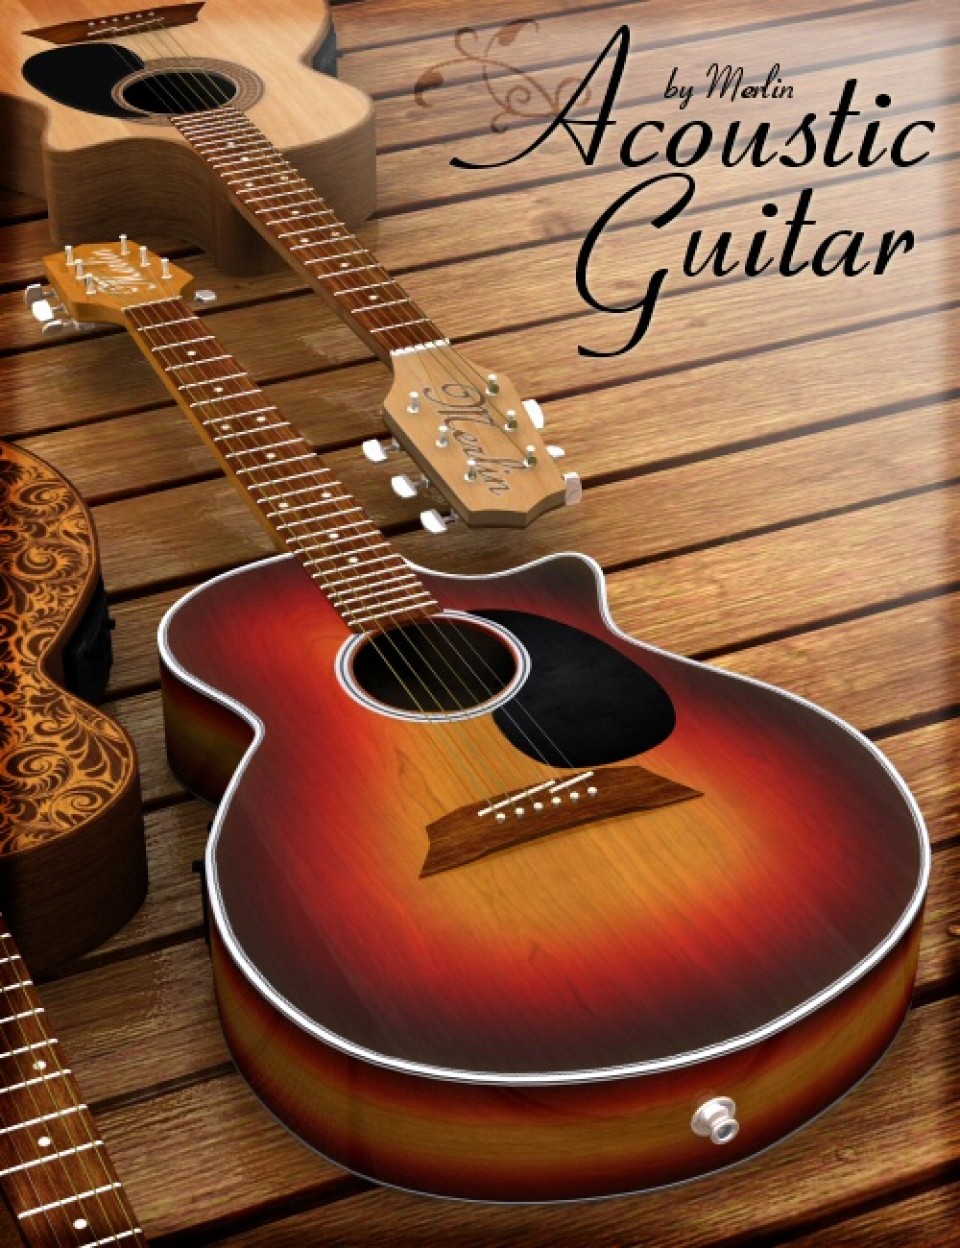 Acoustic Guitar by Merlin_DAZ3DDL